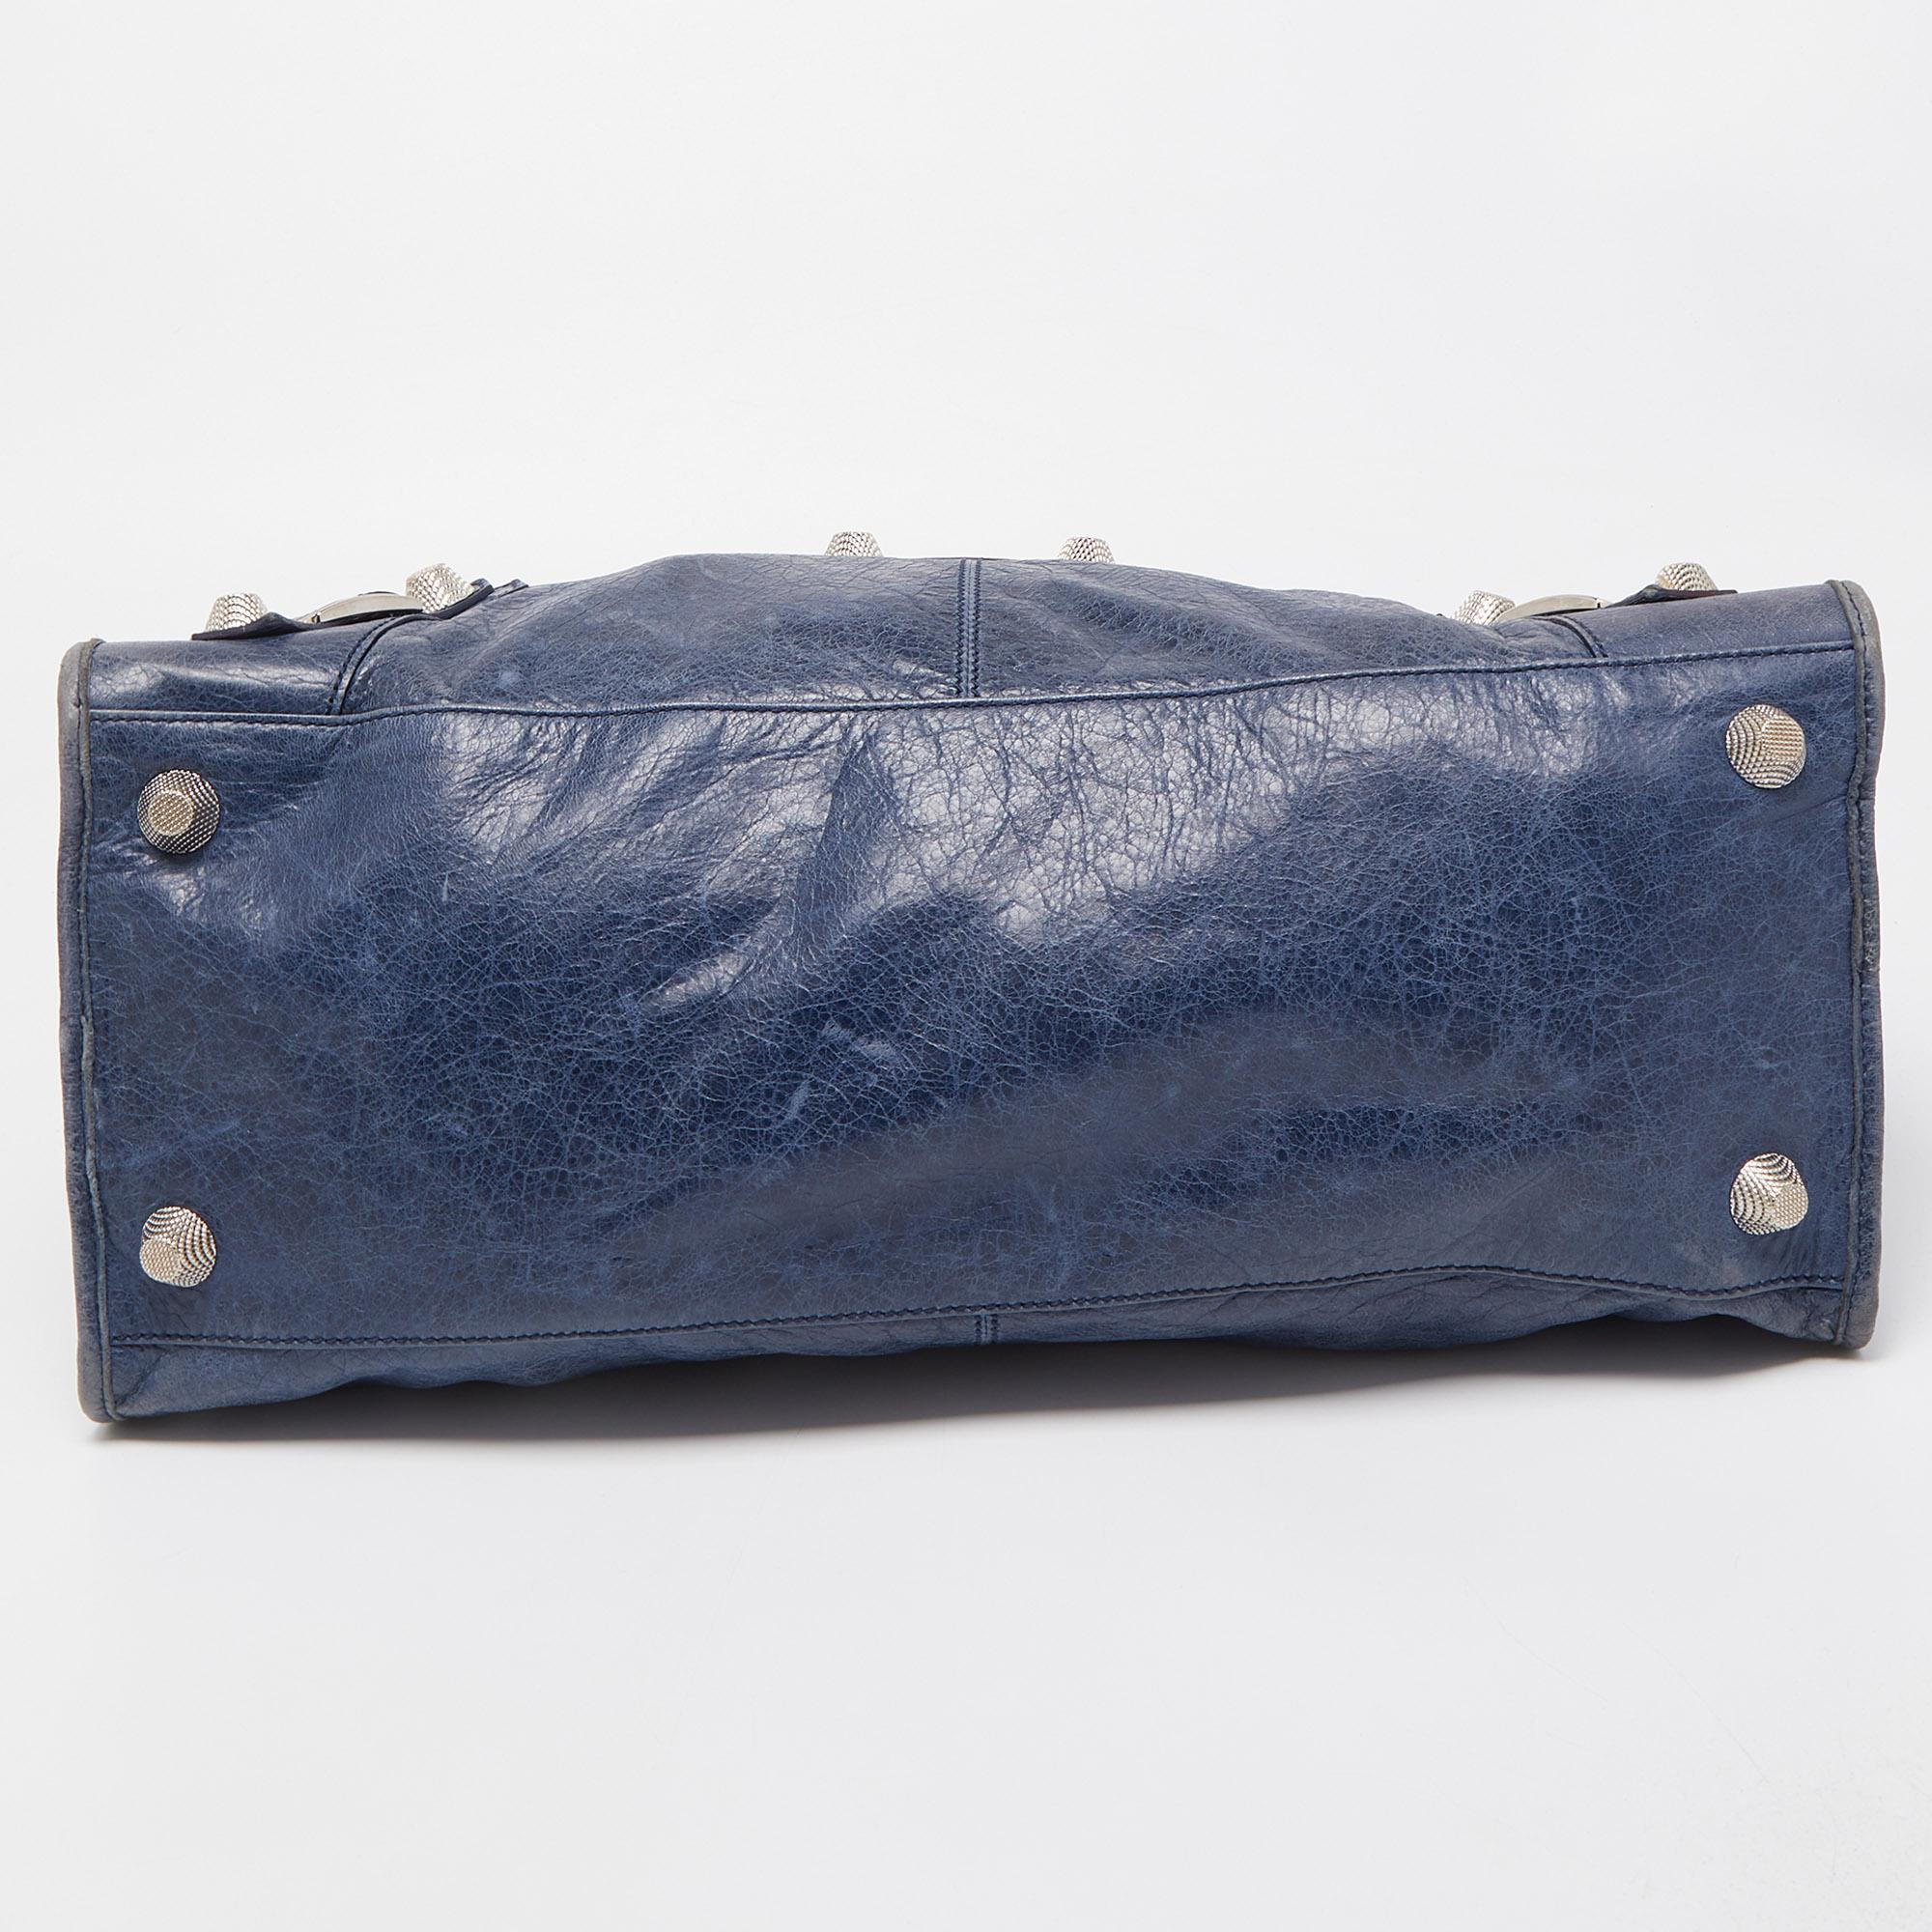 Balenciaga Navy Blue Leather GSH Work Tote 4